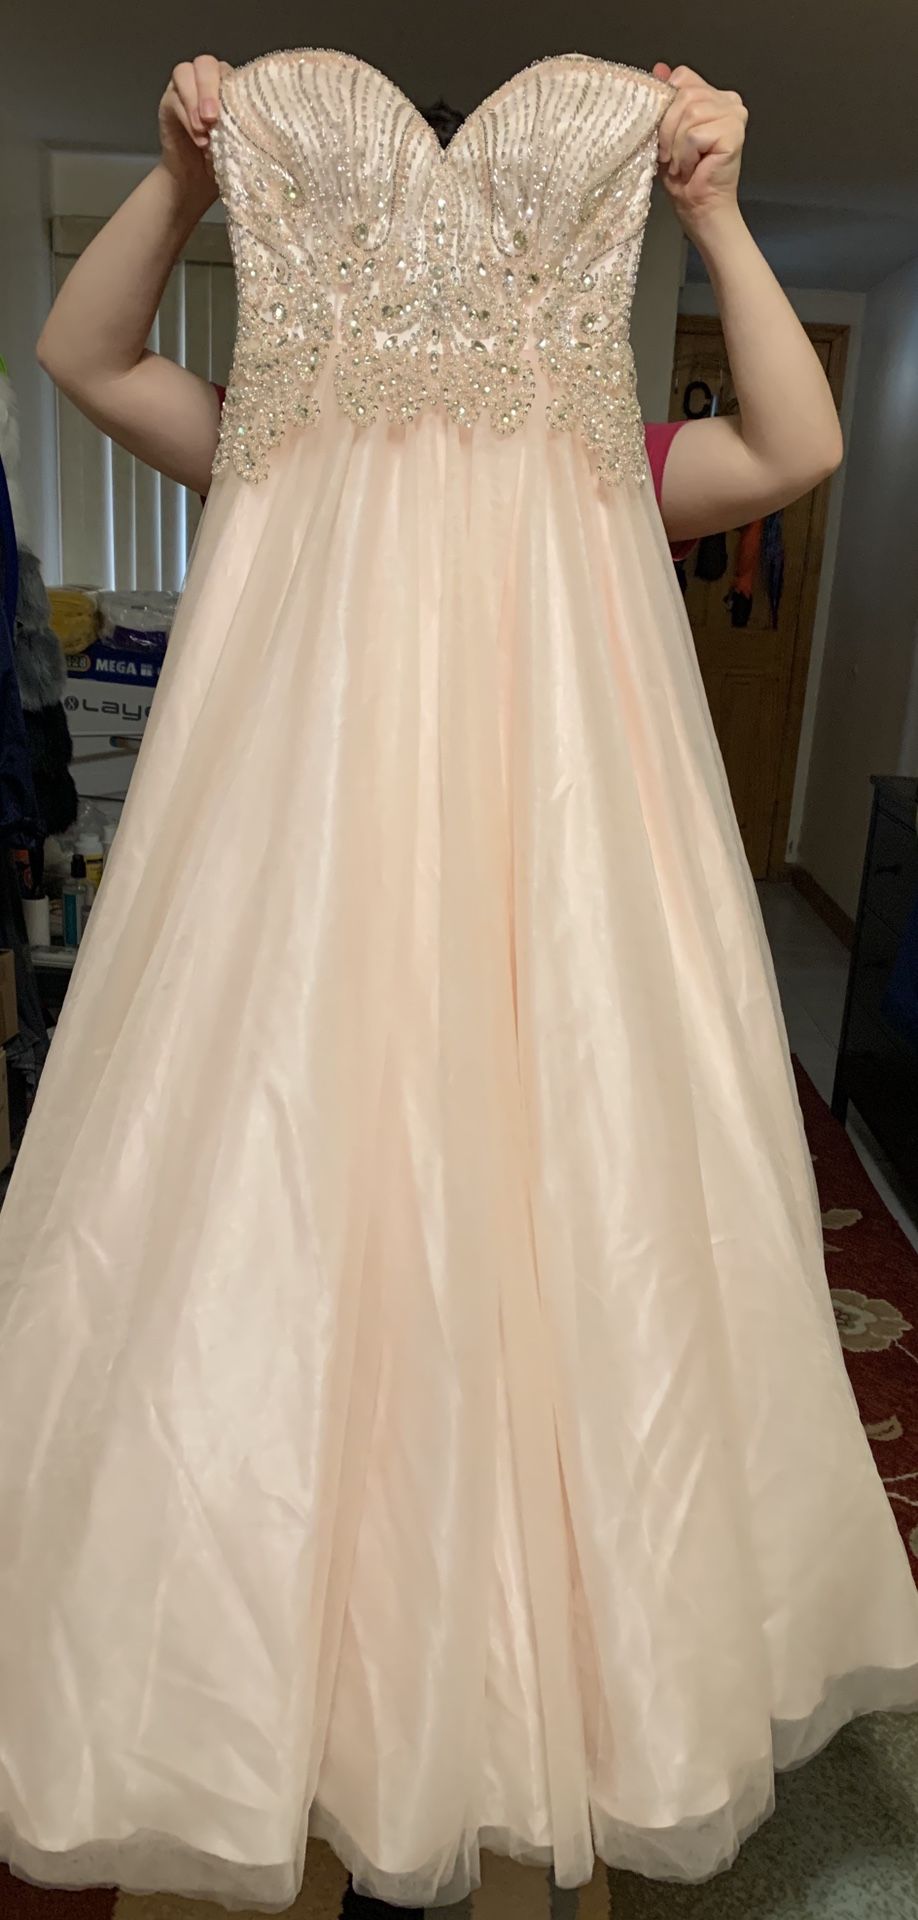 Prom/birthday dress